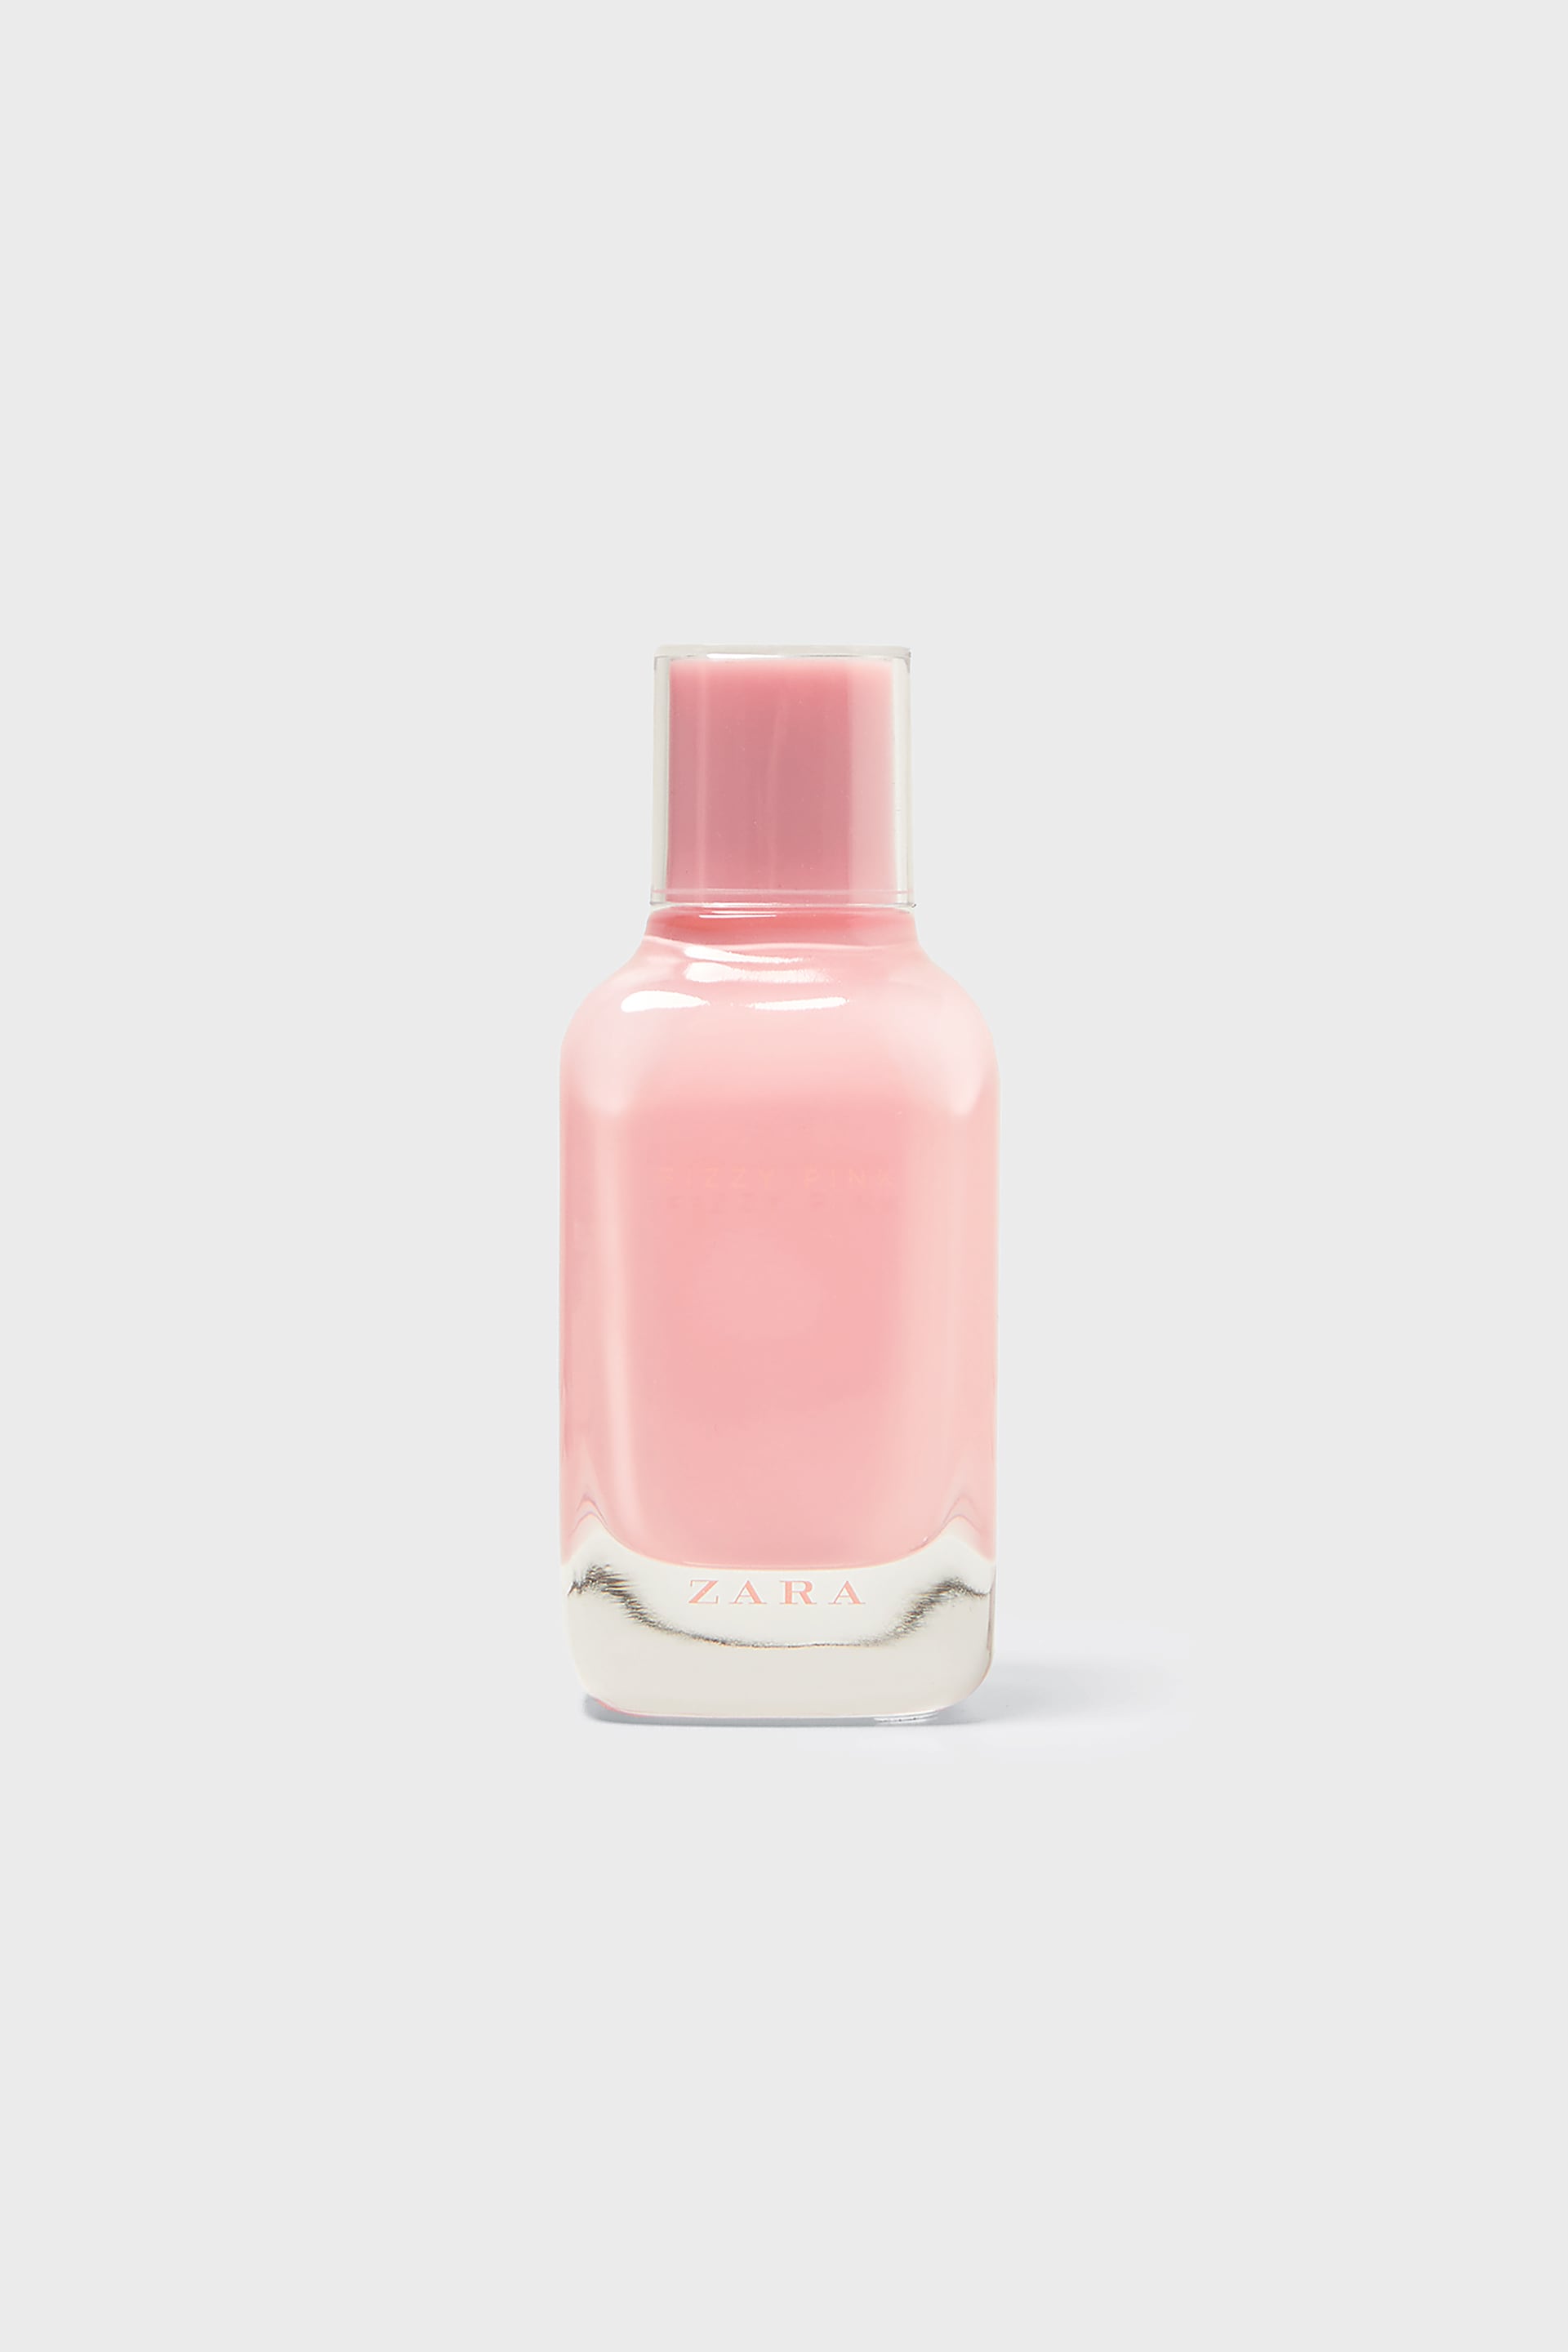 zara perfume pink bottle